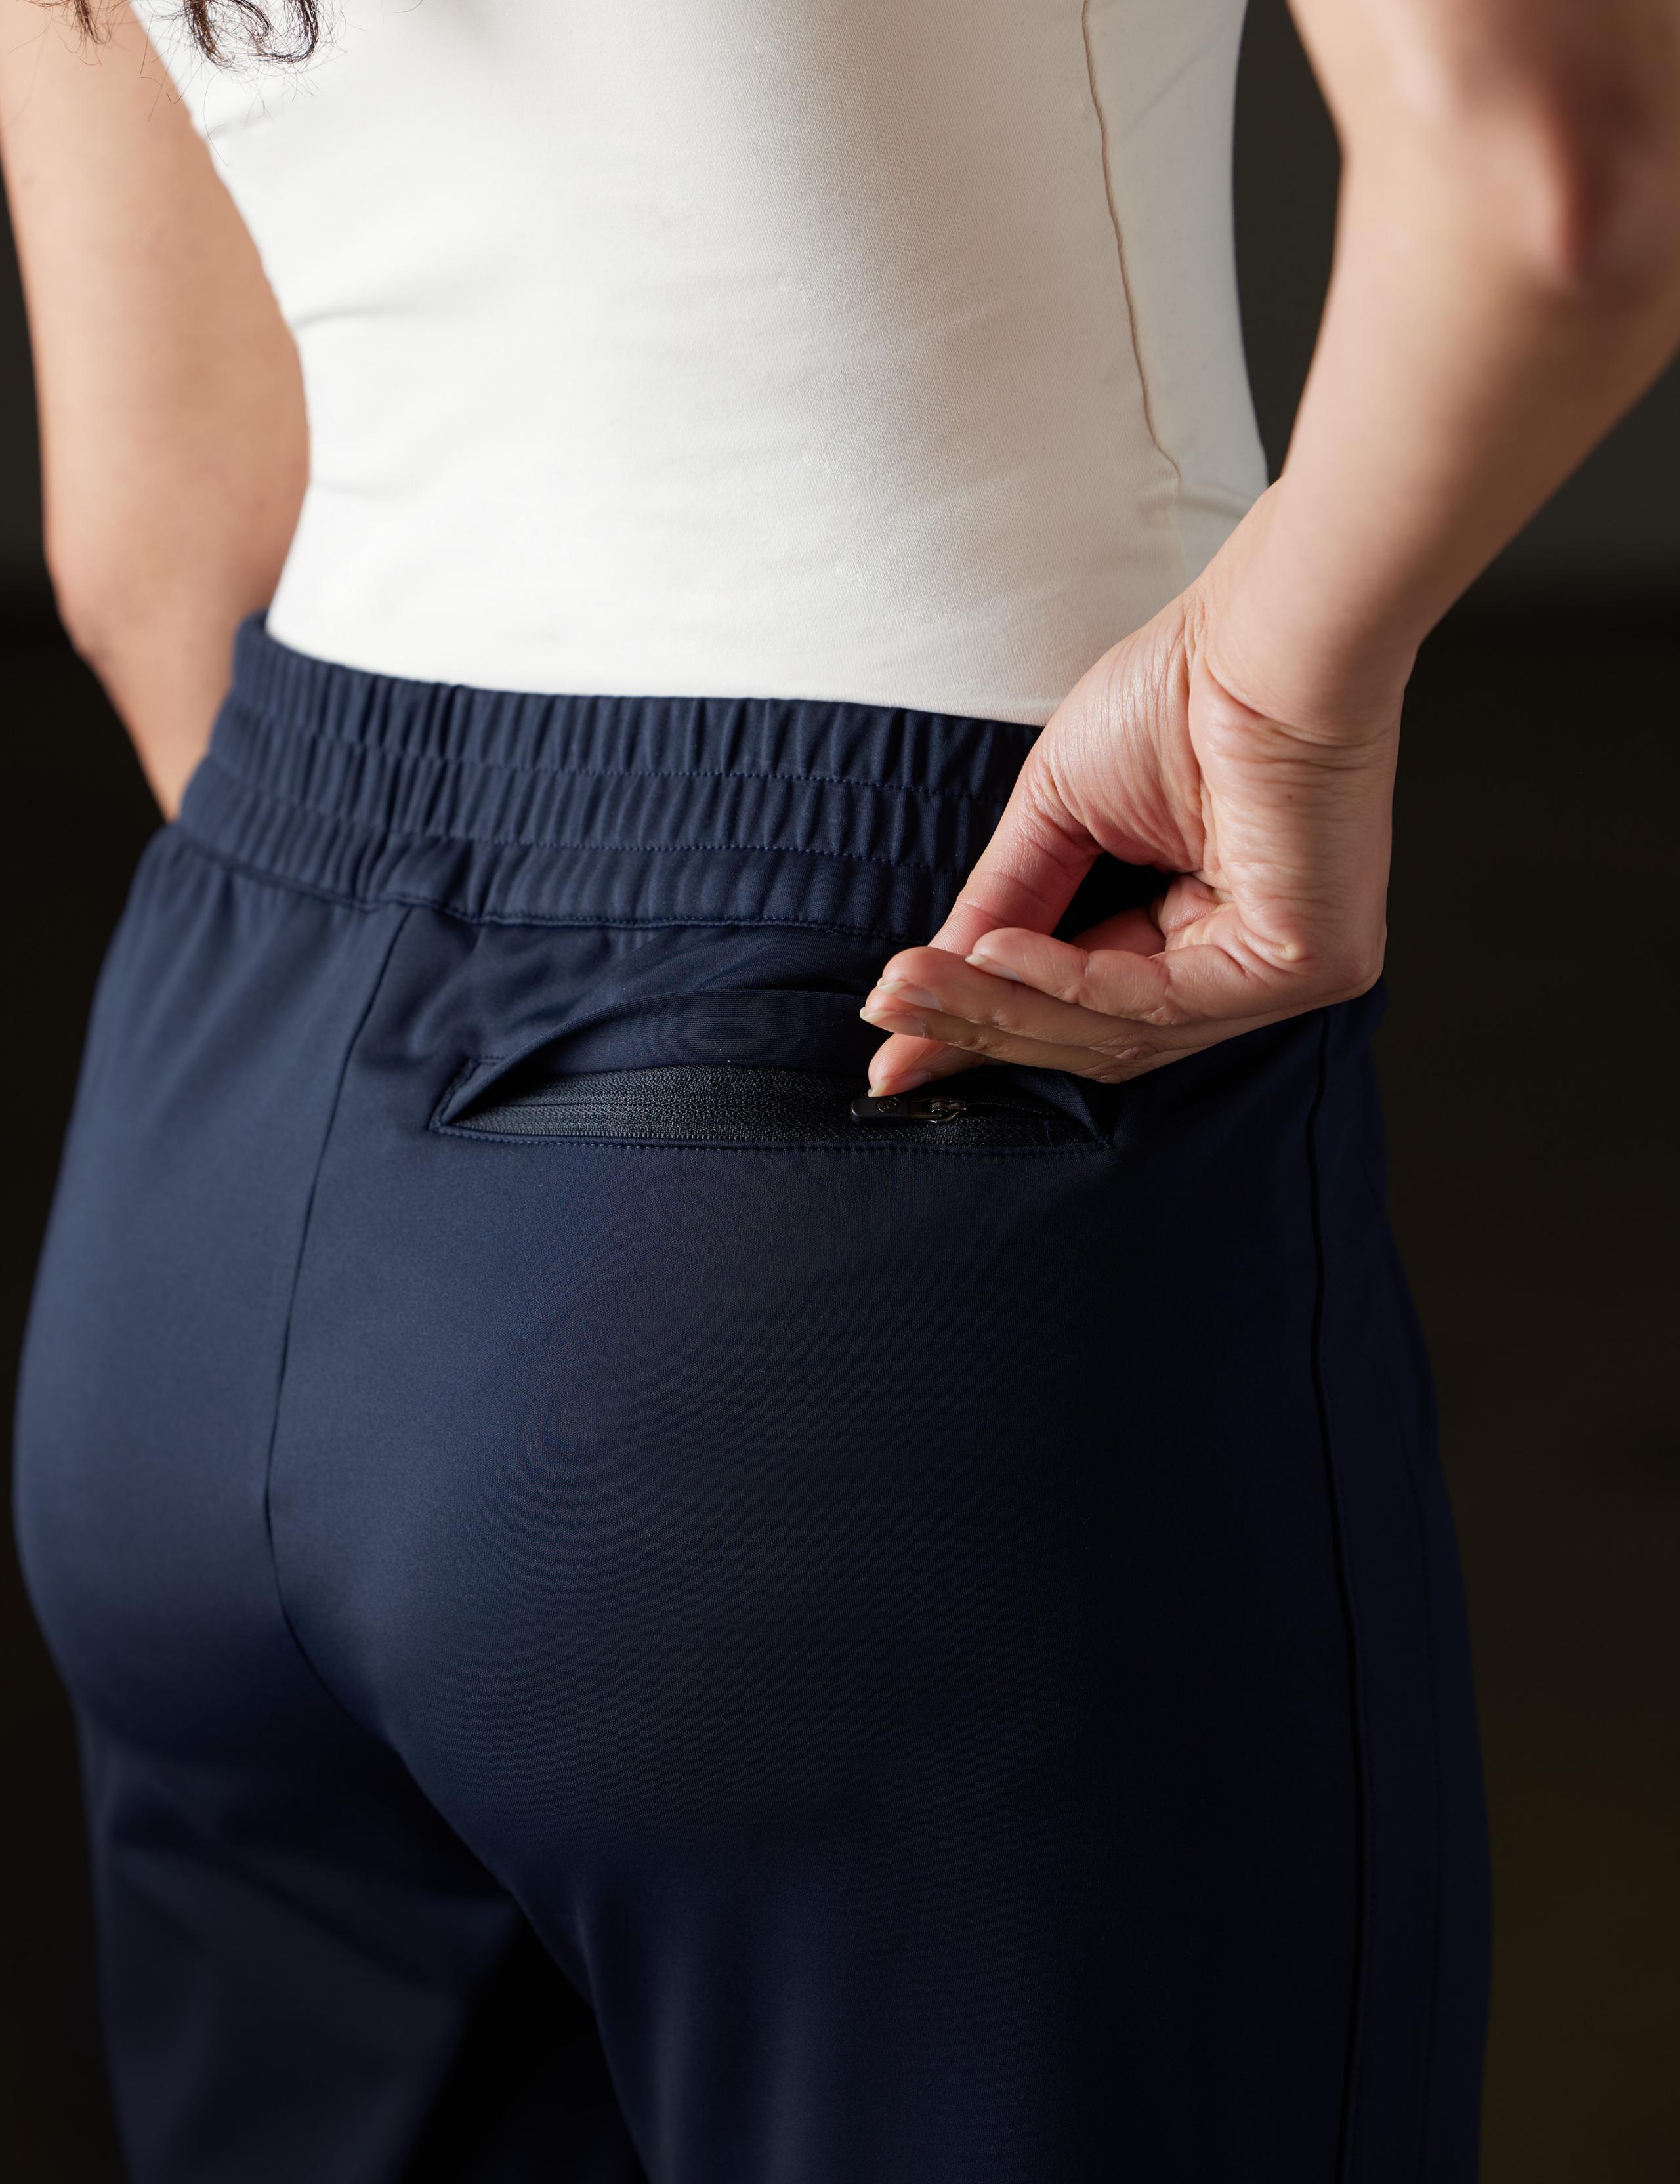 Closeup detail of back pant pocket